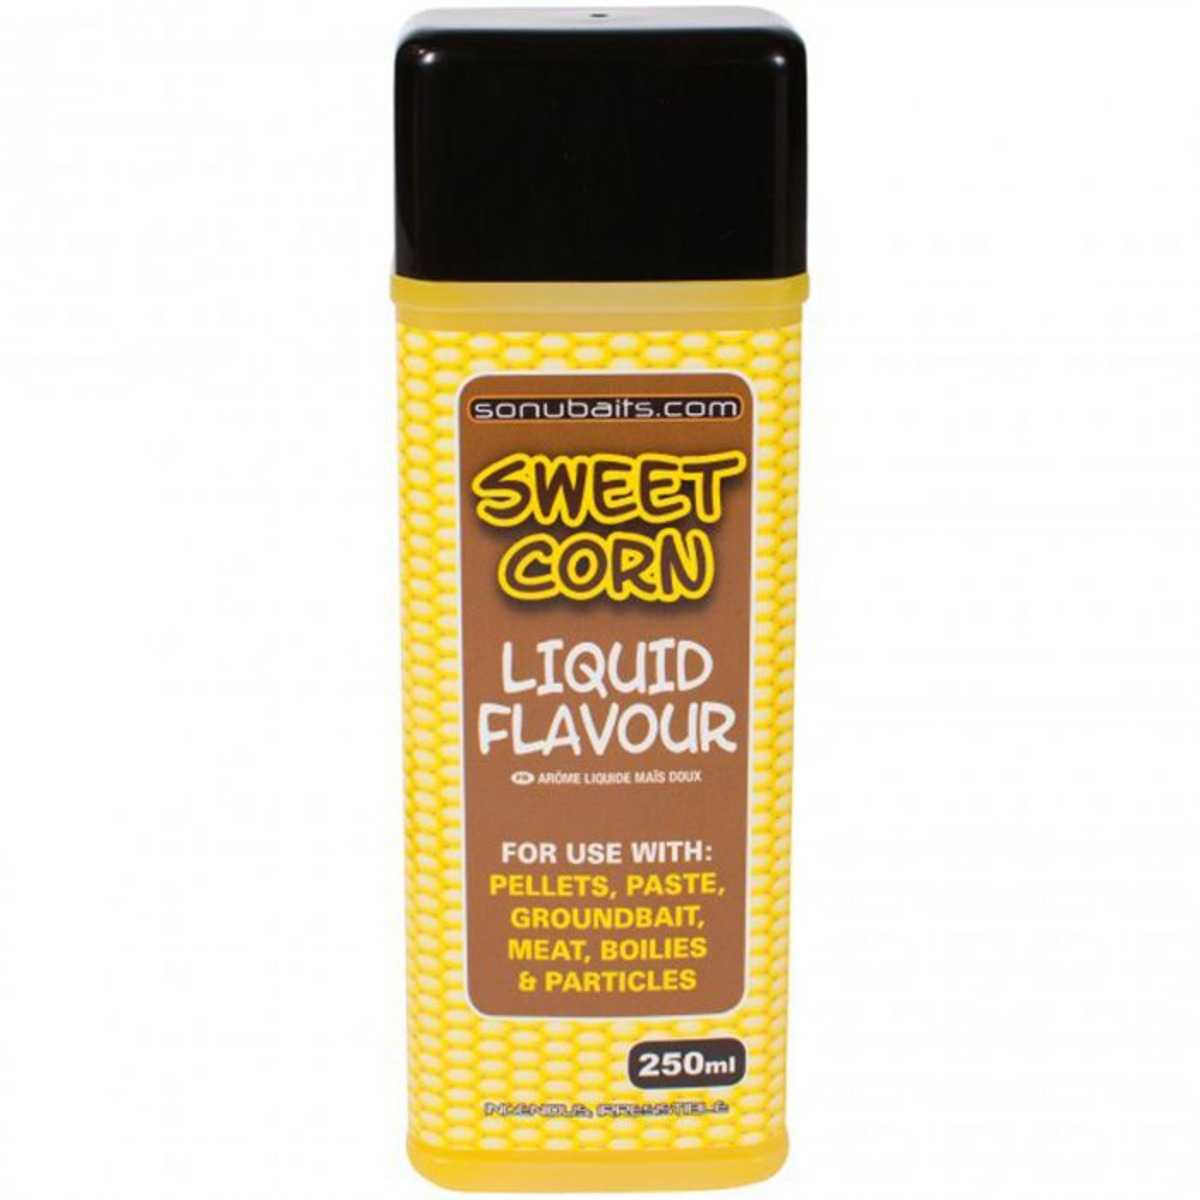 Sonubaits Liquid Flavour - Sweetcorn - 250 ml